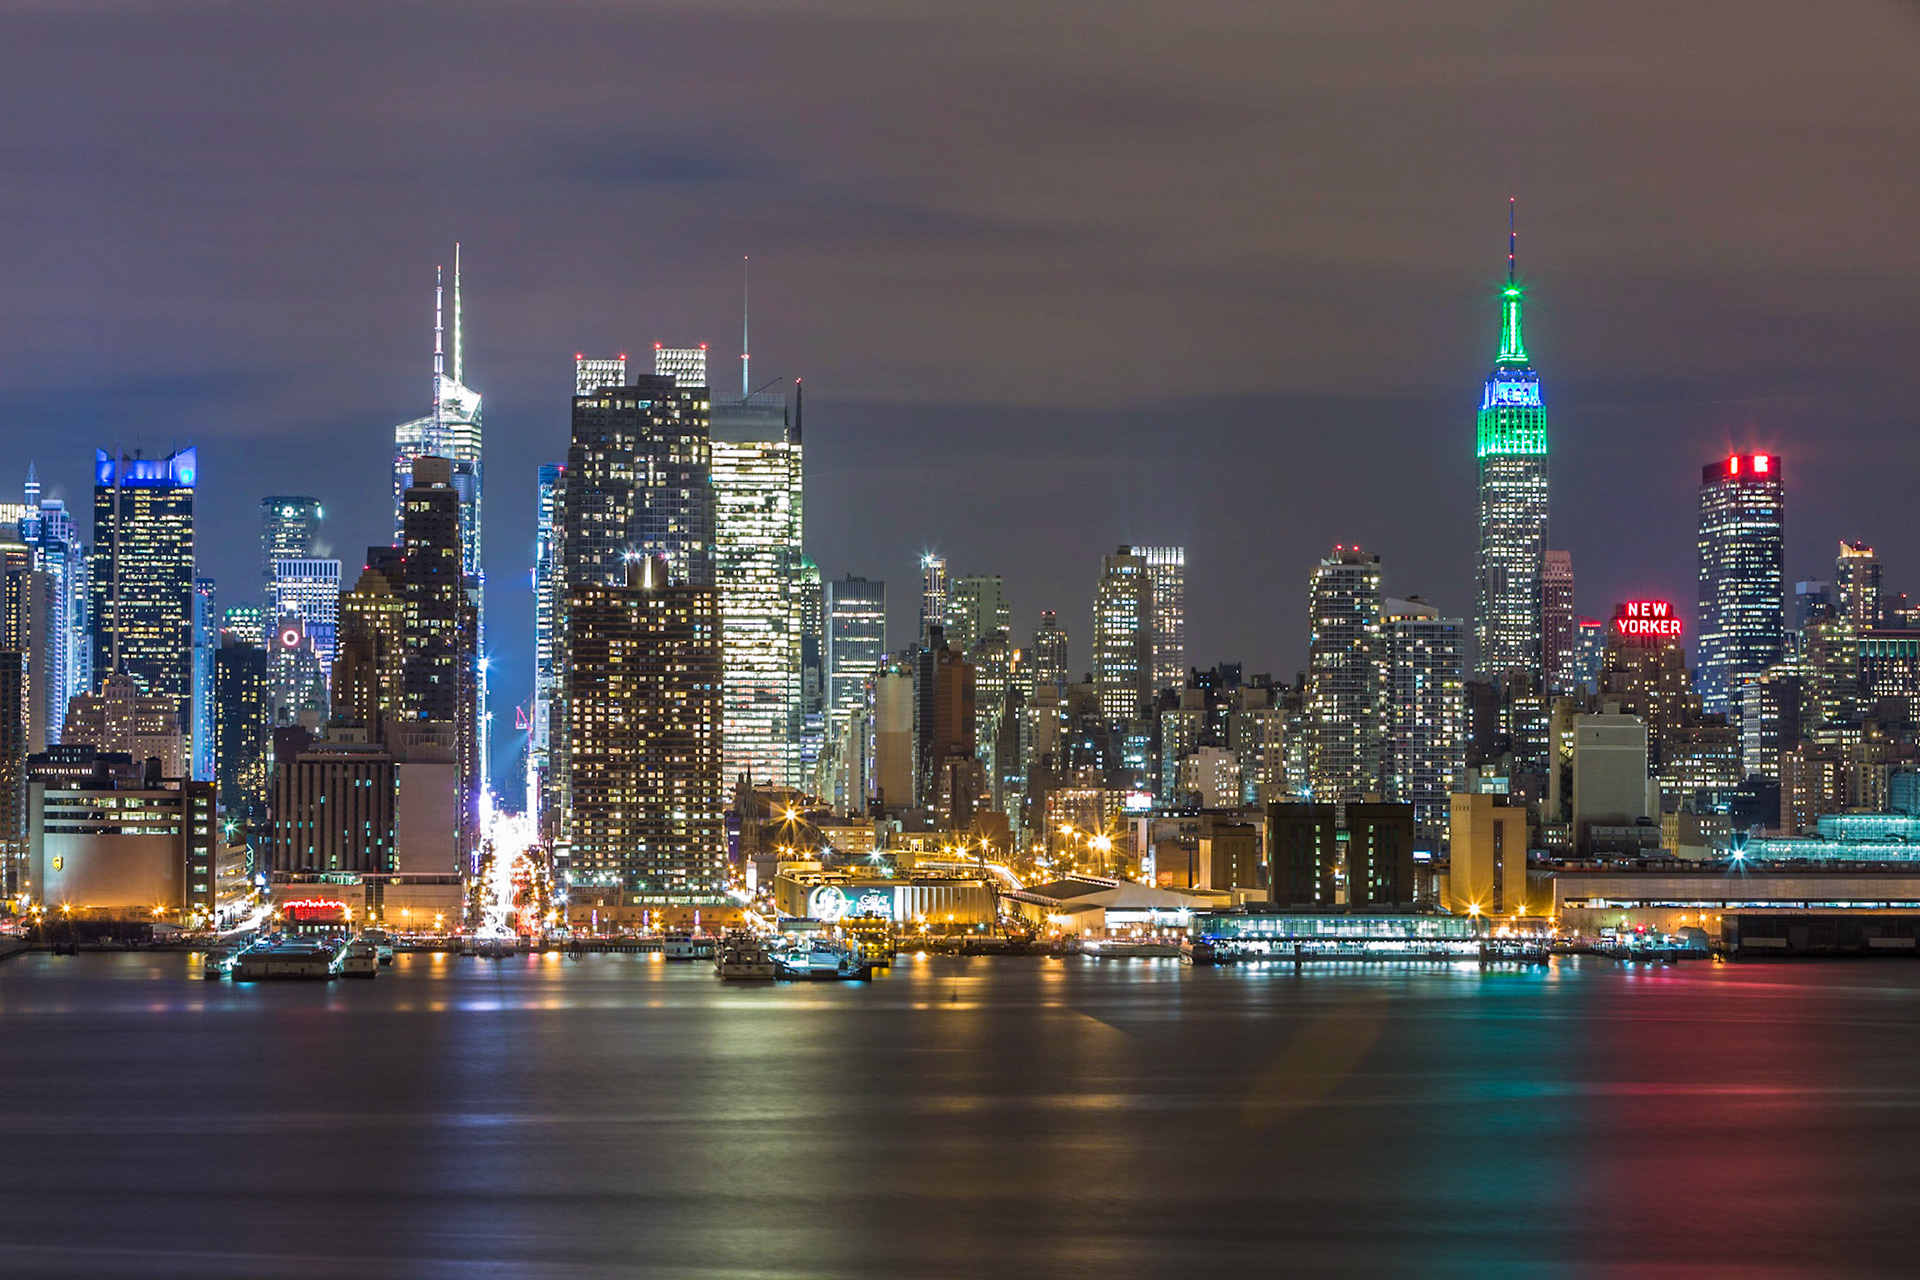 heidger marx photography - New York City at night